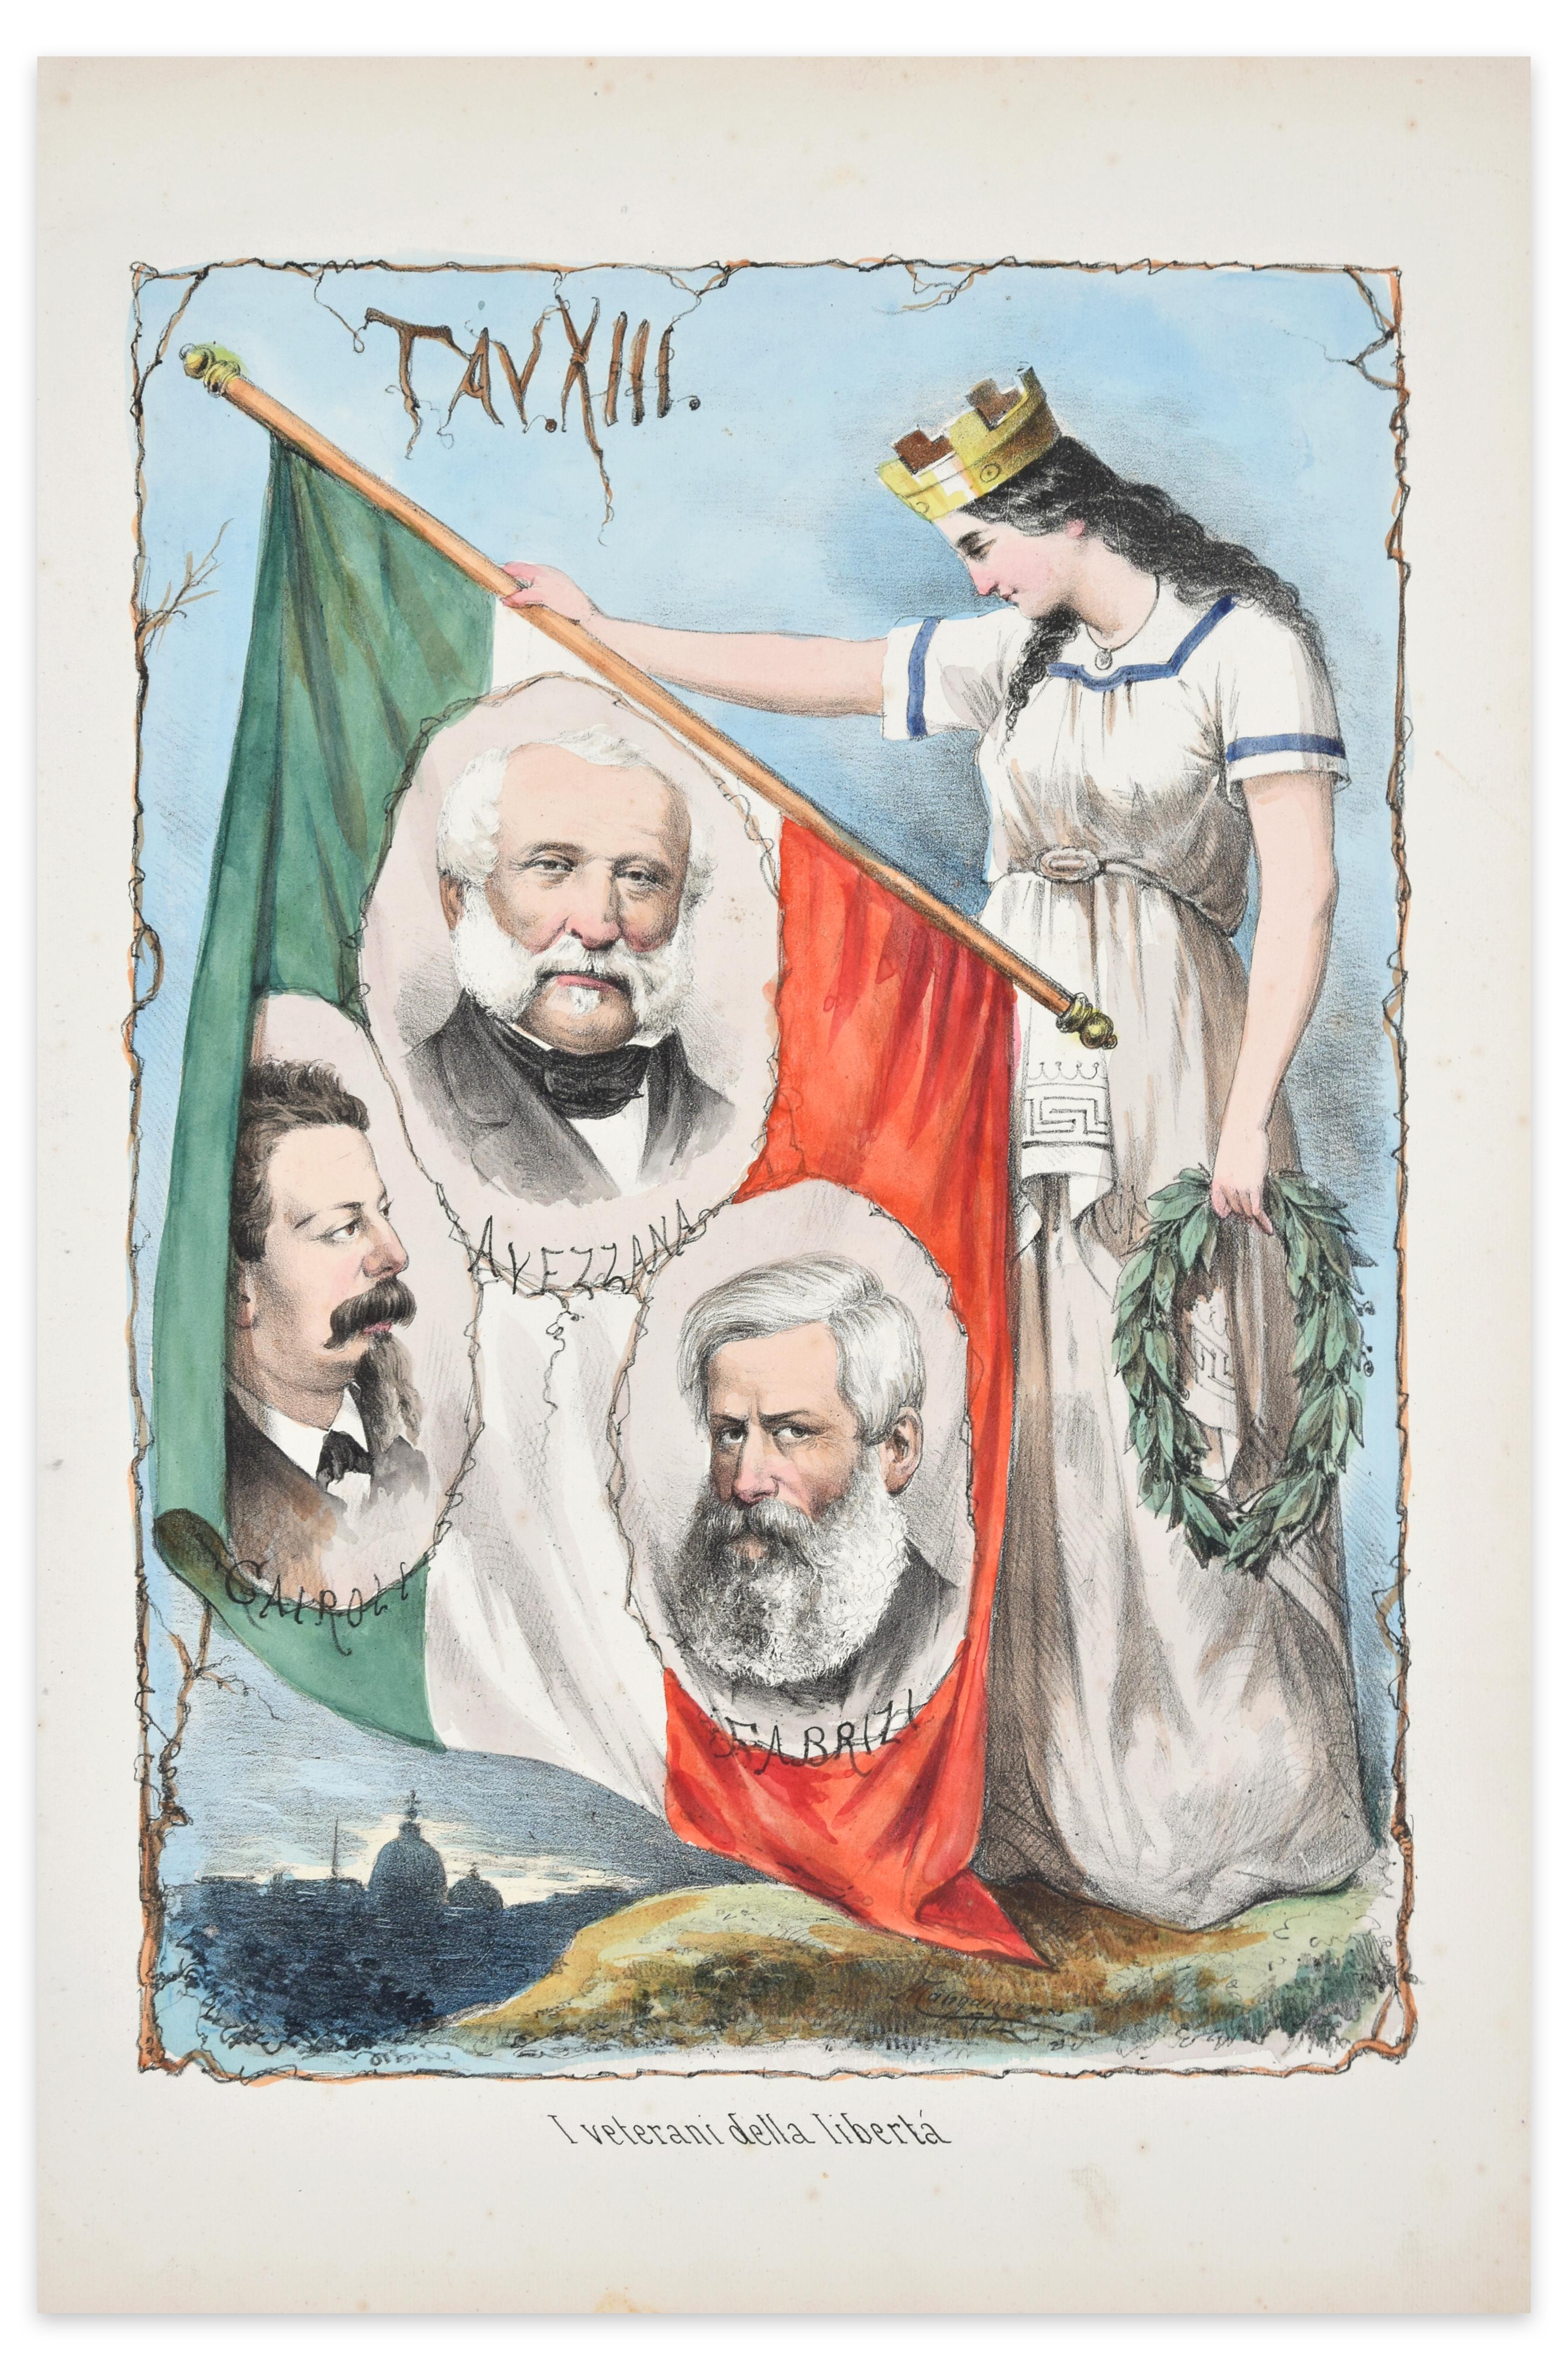 Antonio Manganaro Figurative Print - The Veterans of Freedom - Lithograph by A. Manganaro - 1872